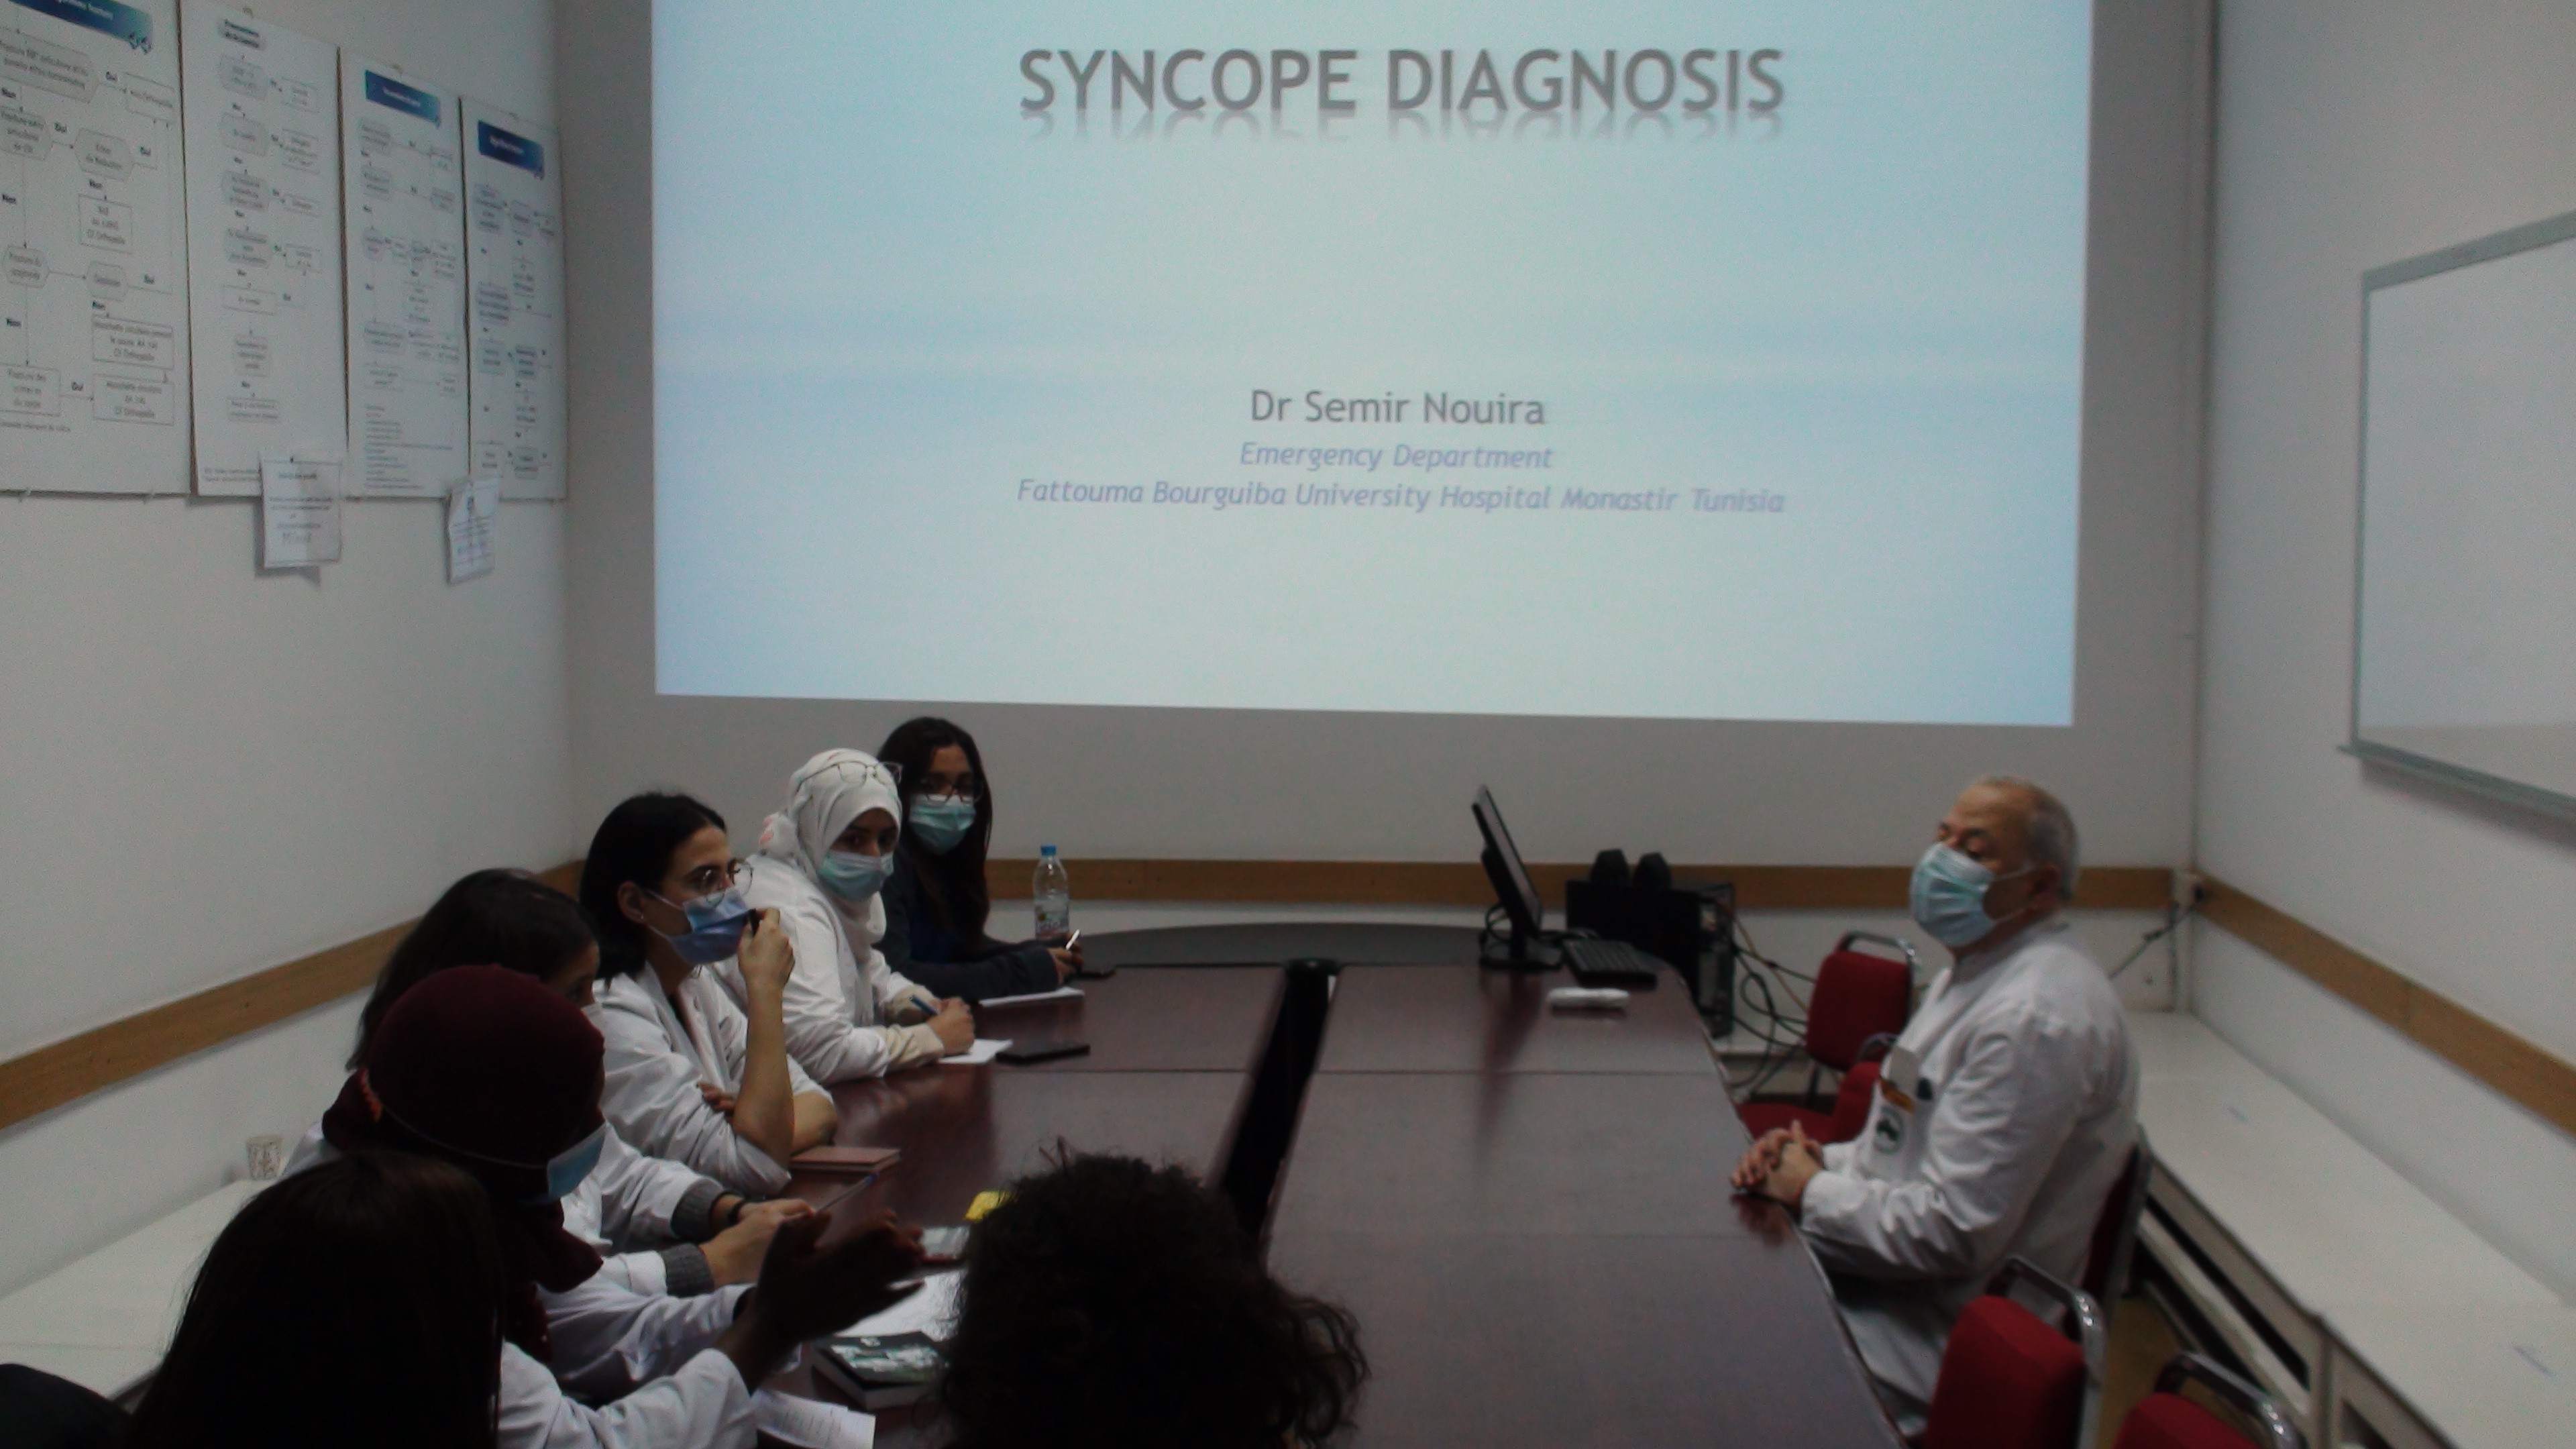 Syncope diagnosis